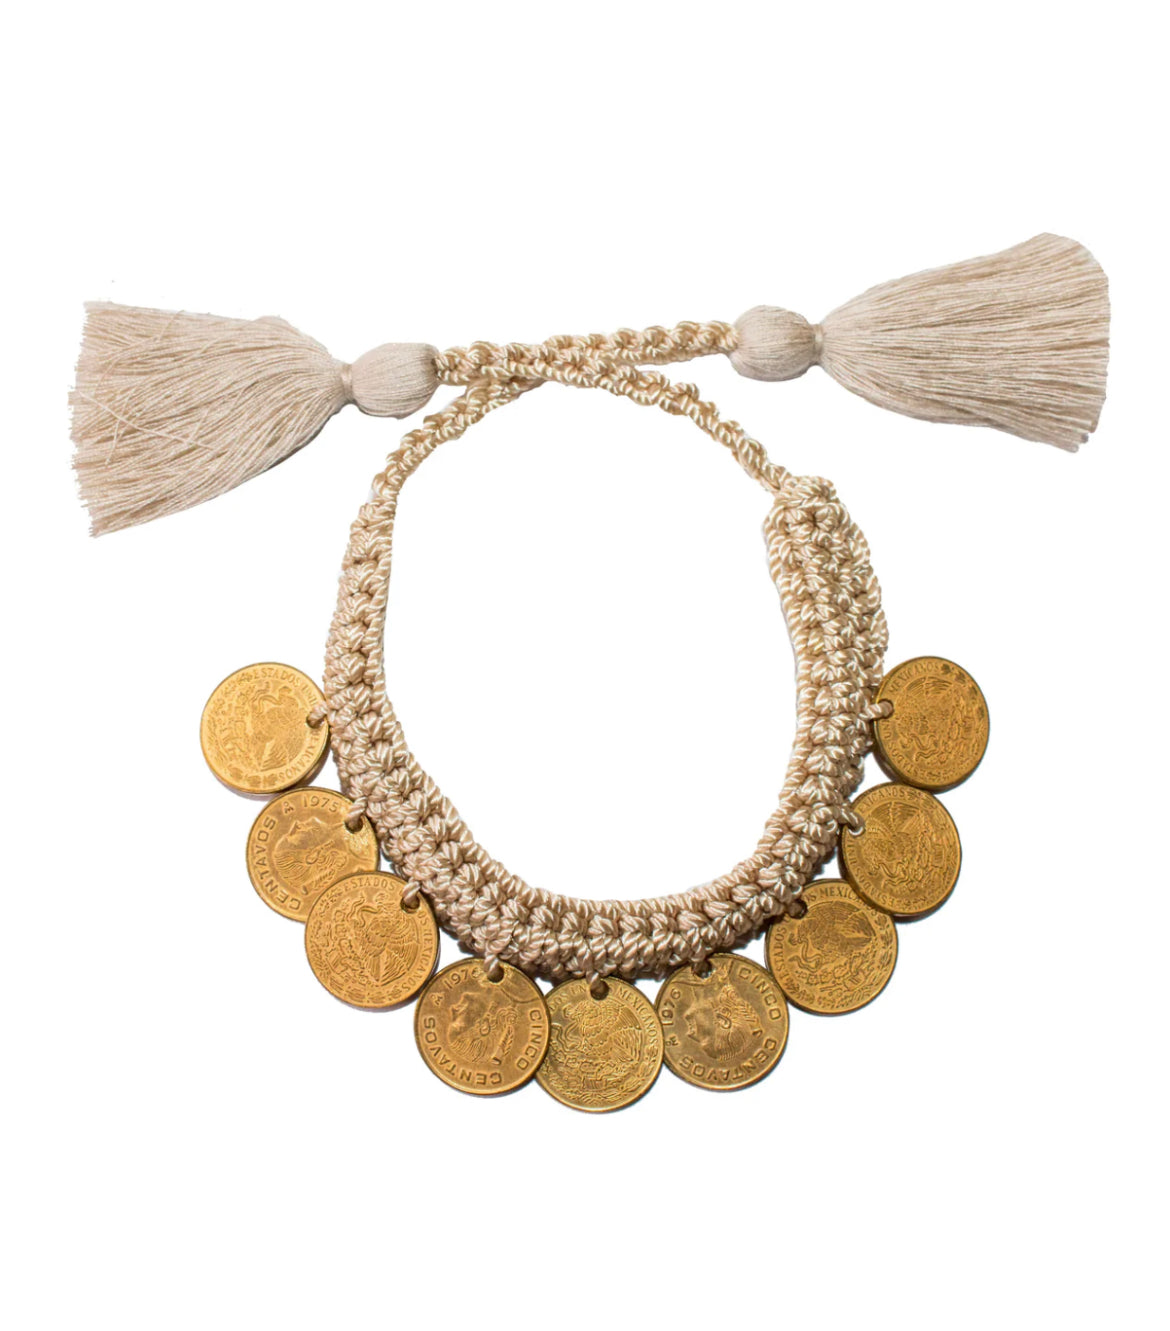 vintage coins bracelet, vintage coins pendant, coin jewelry, coin bracelet, coin chocker necklace, coin adornments, wrist adonrments, handmade in tulum